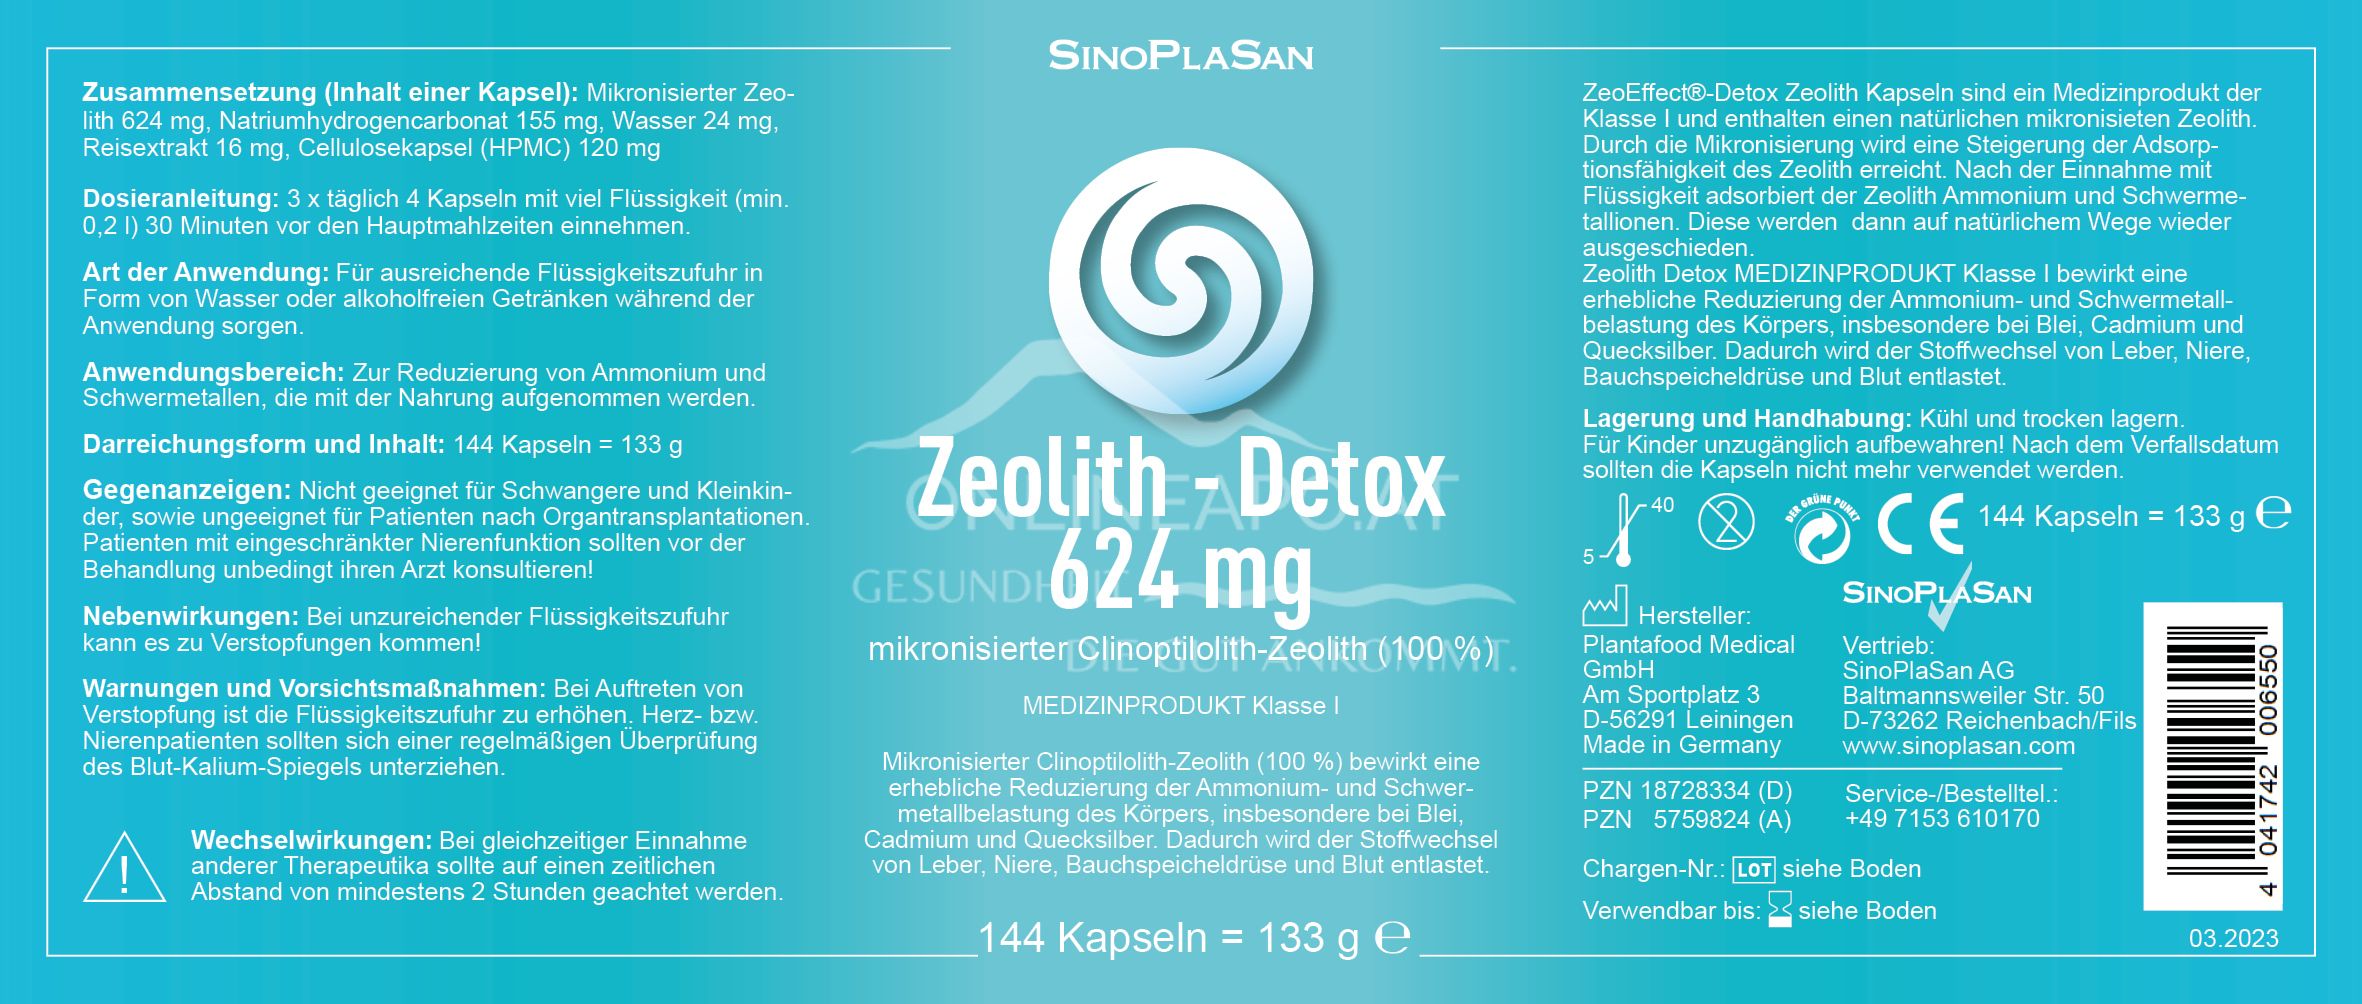 SinoPlaSan Zeolith Detox MED 624 mg Kapseln